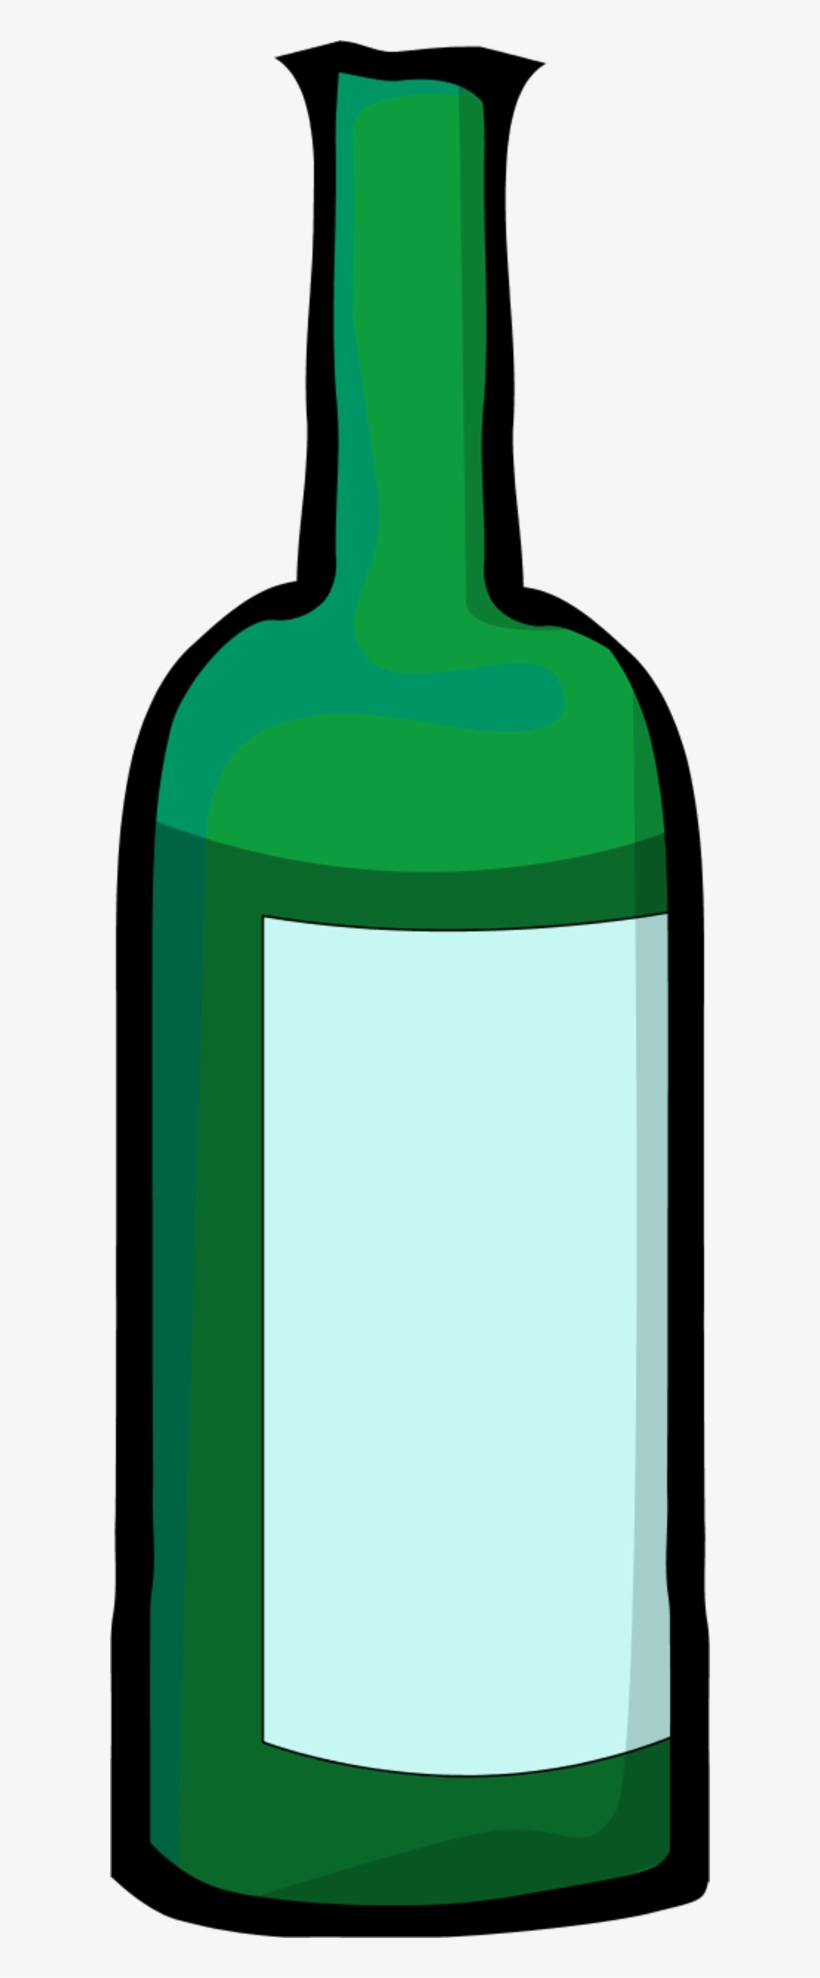 Bottle Clipart Green Bottle - Wine Bottle Clip Art, transparent png #3663301